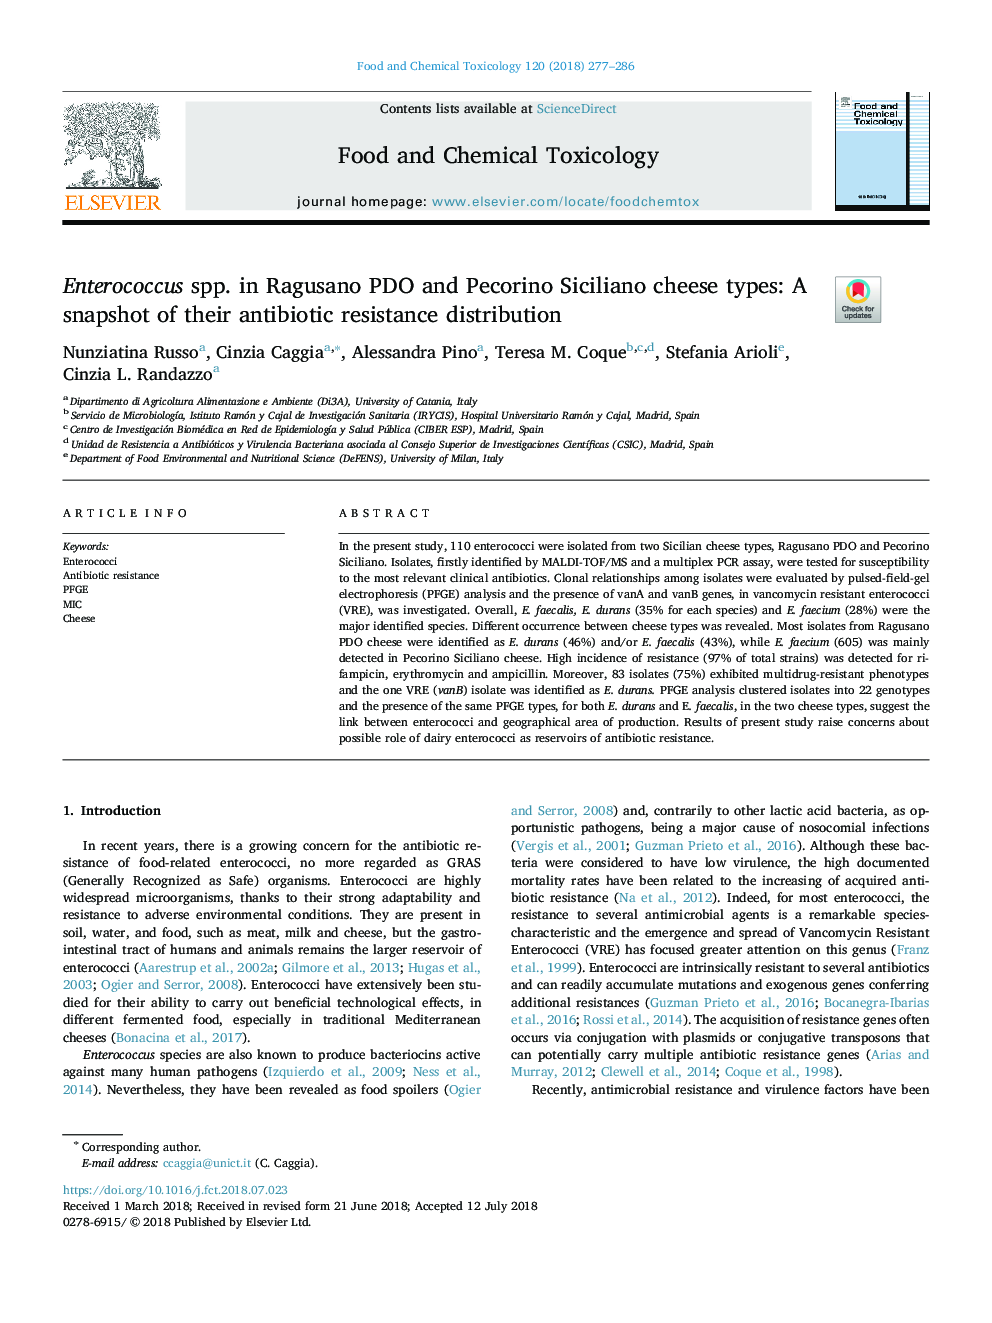 Enterococcus spp. in Ragusano PDO and Pecorino Siciliano cheese types: A snapshot of their antibiotic resistance distribution